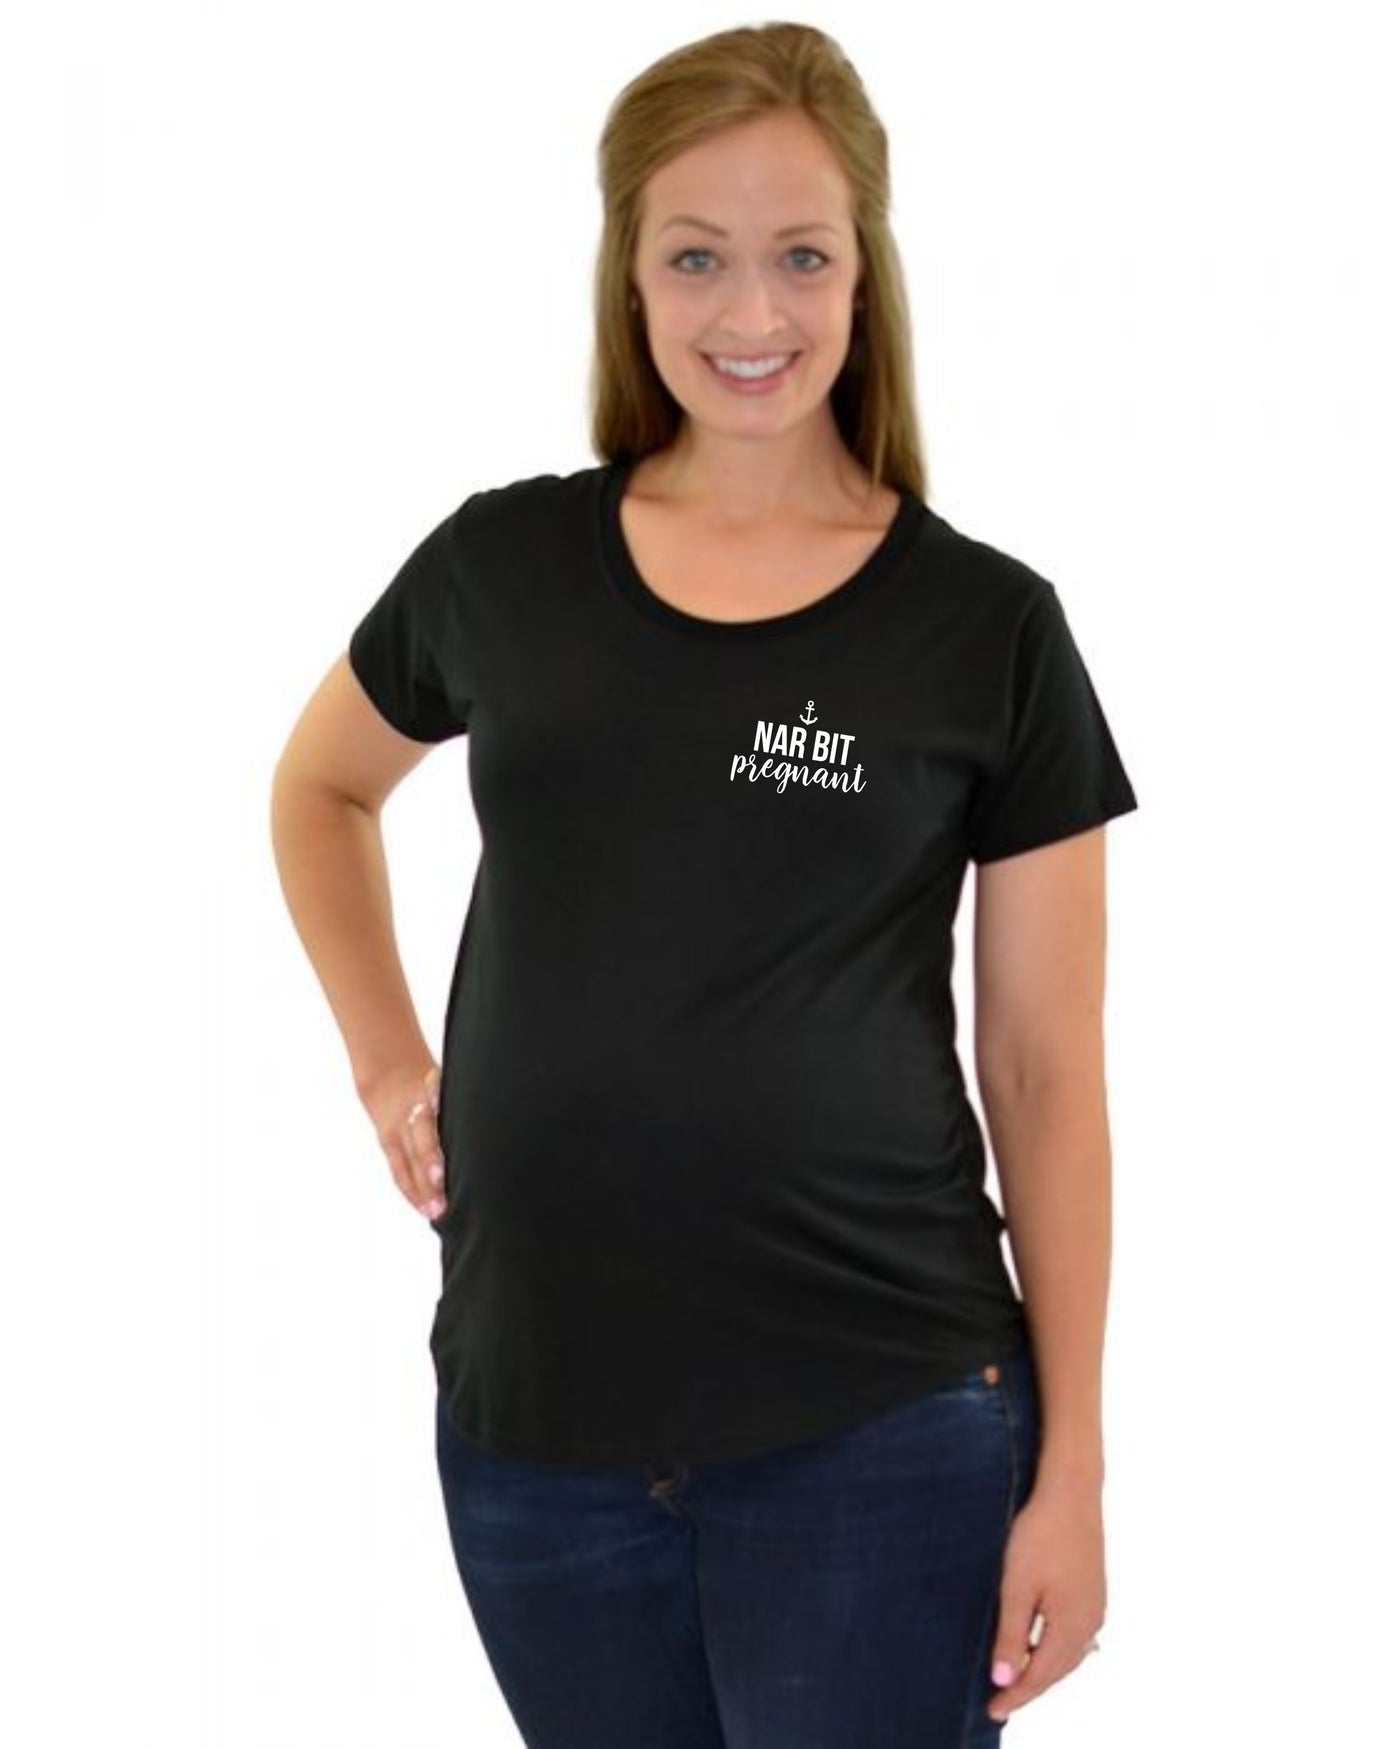 "Nar Bit Pregnant" Maternity T-Shirt